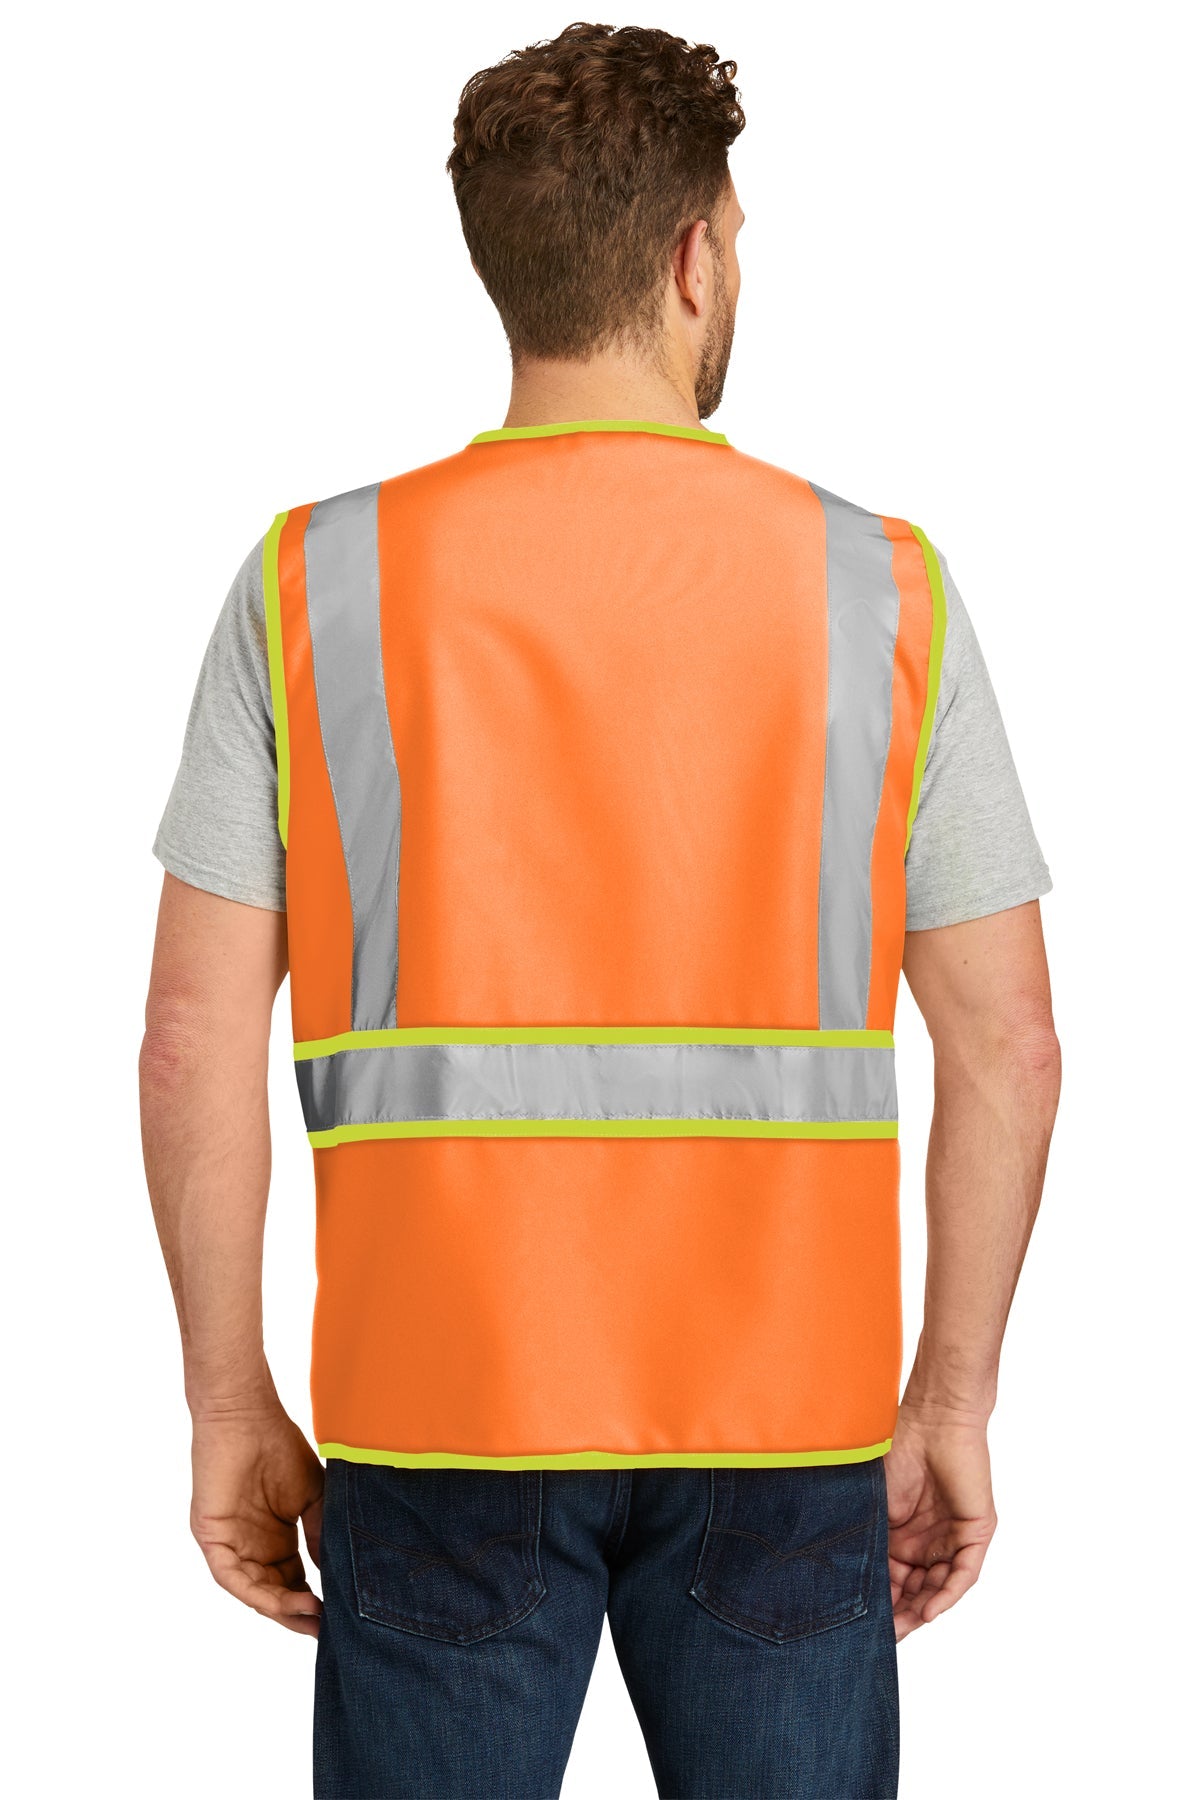 cornerstone_csv407 _safety orange/safety yellow_company_logo_jackets